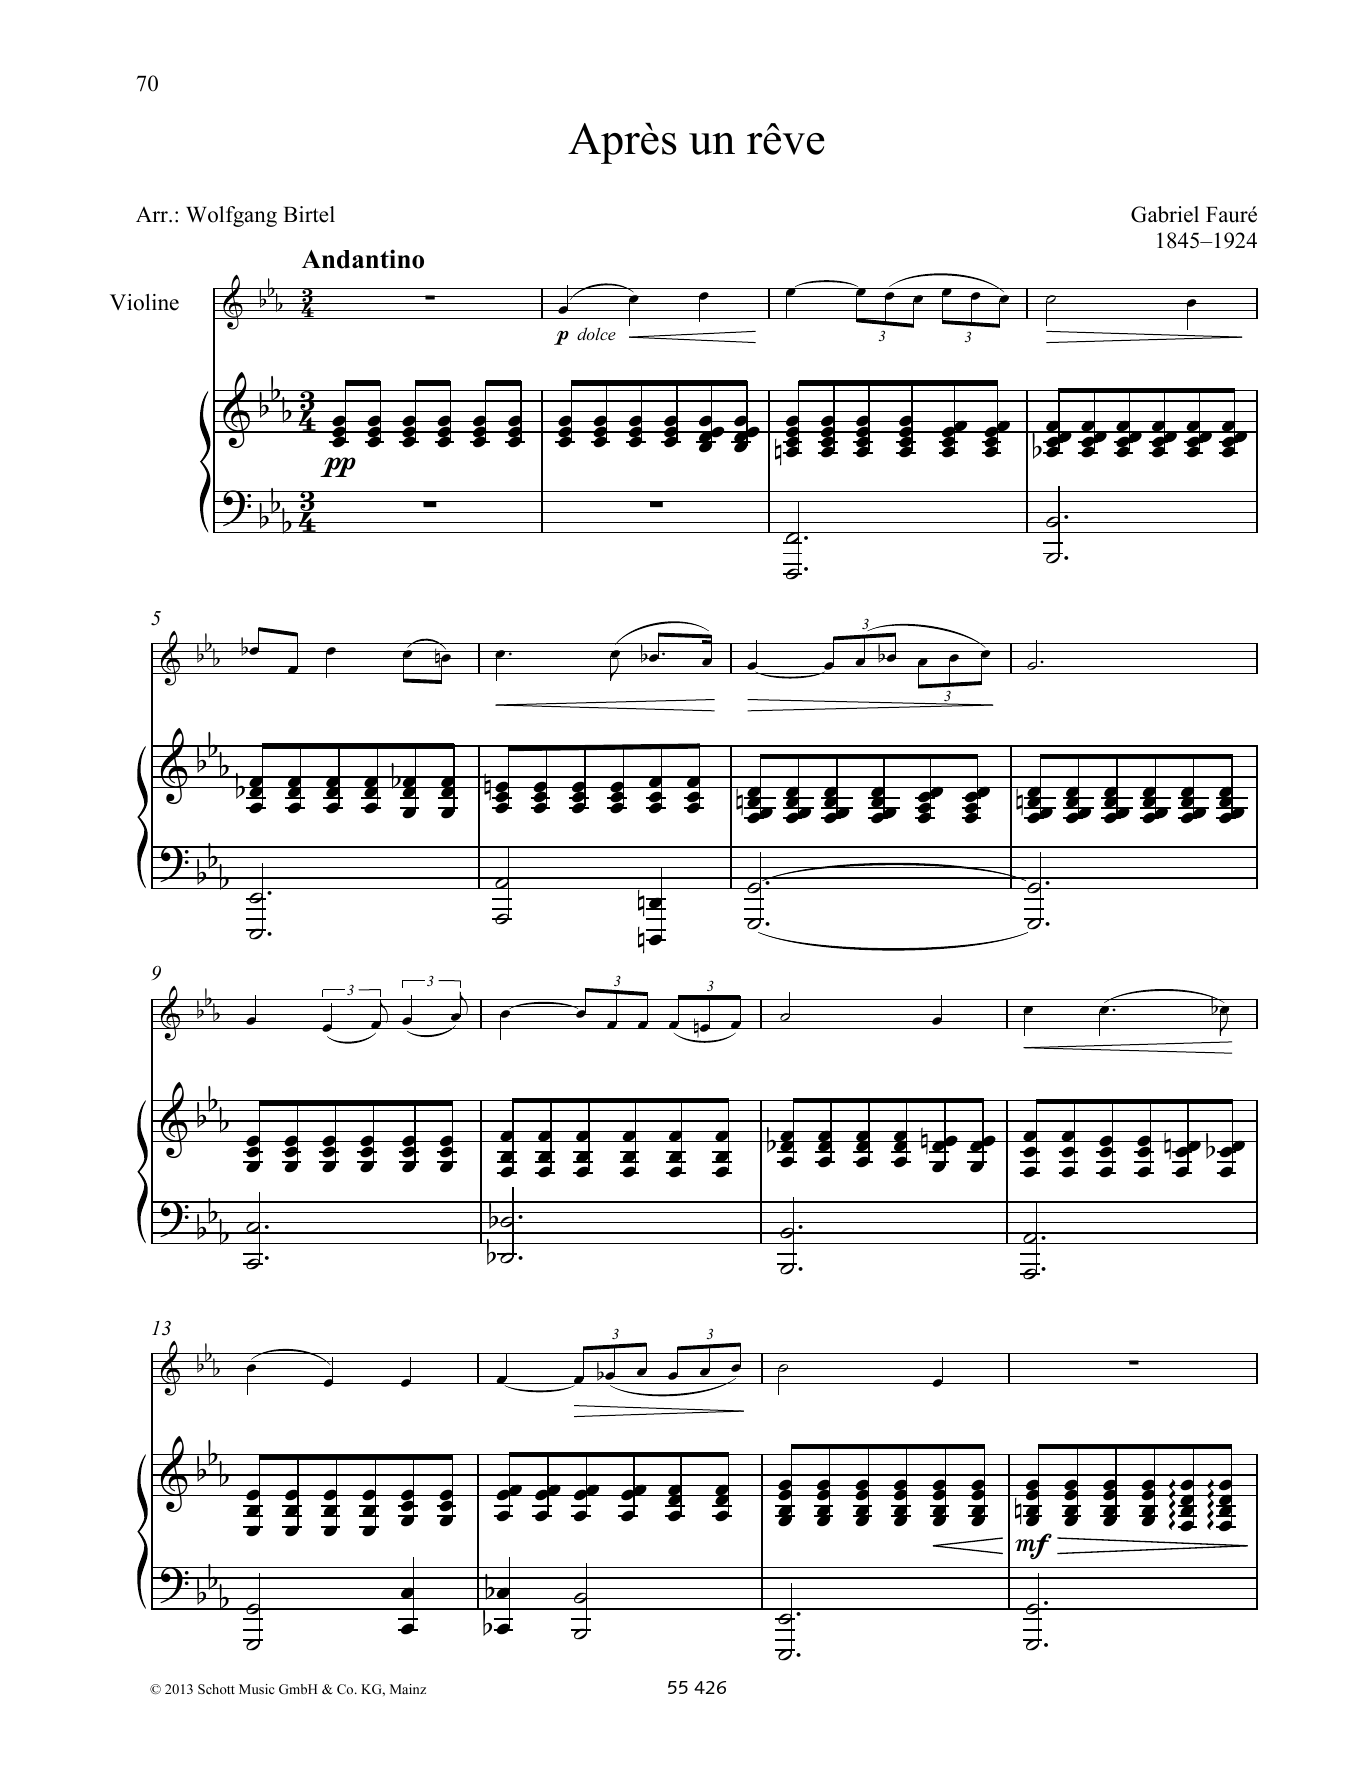 Gabriel Fauré Apres un reve Sheet Music Notes & Chords for String Solo - Download or Print PDF